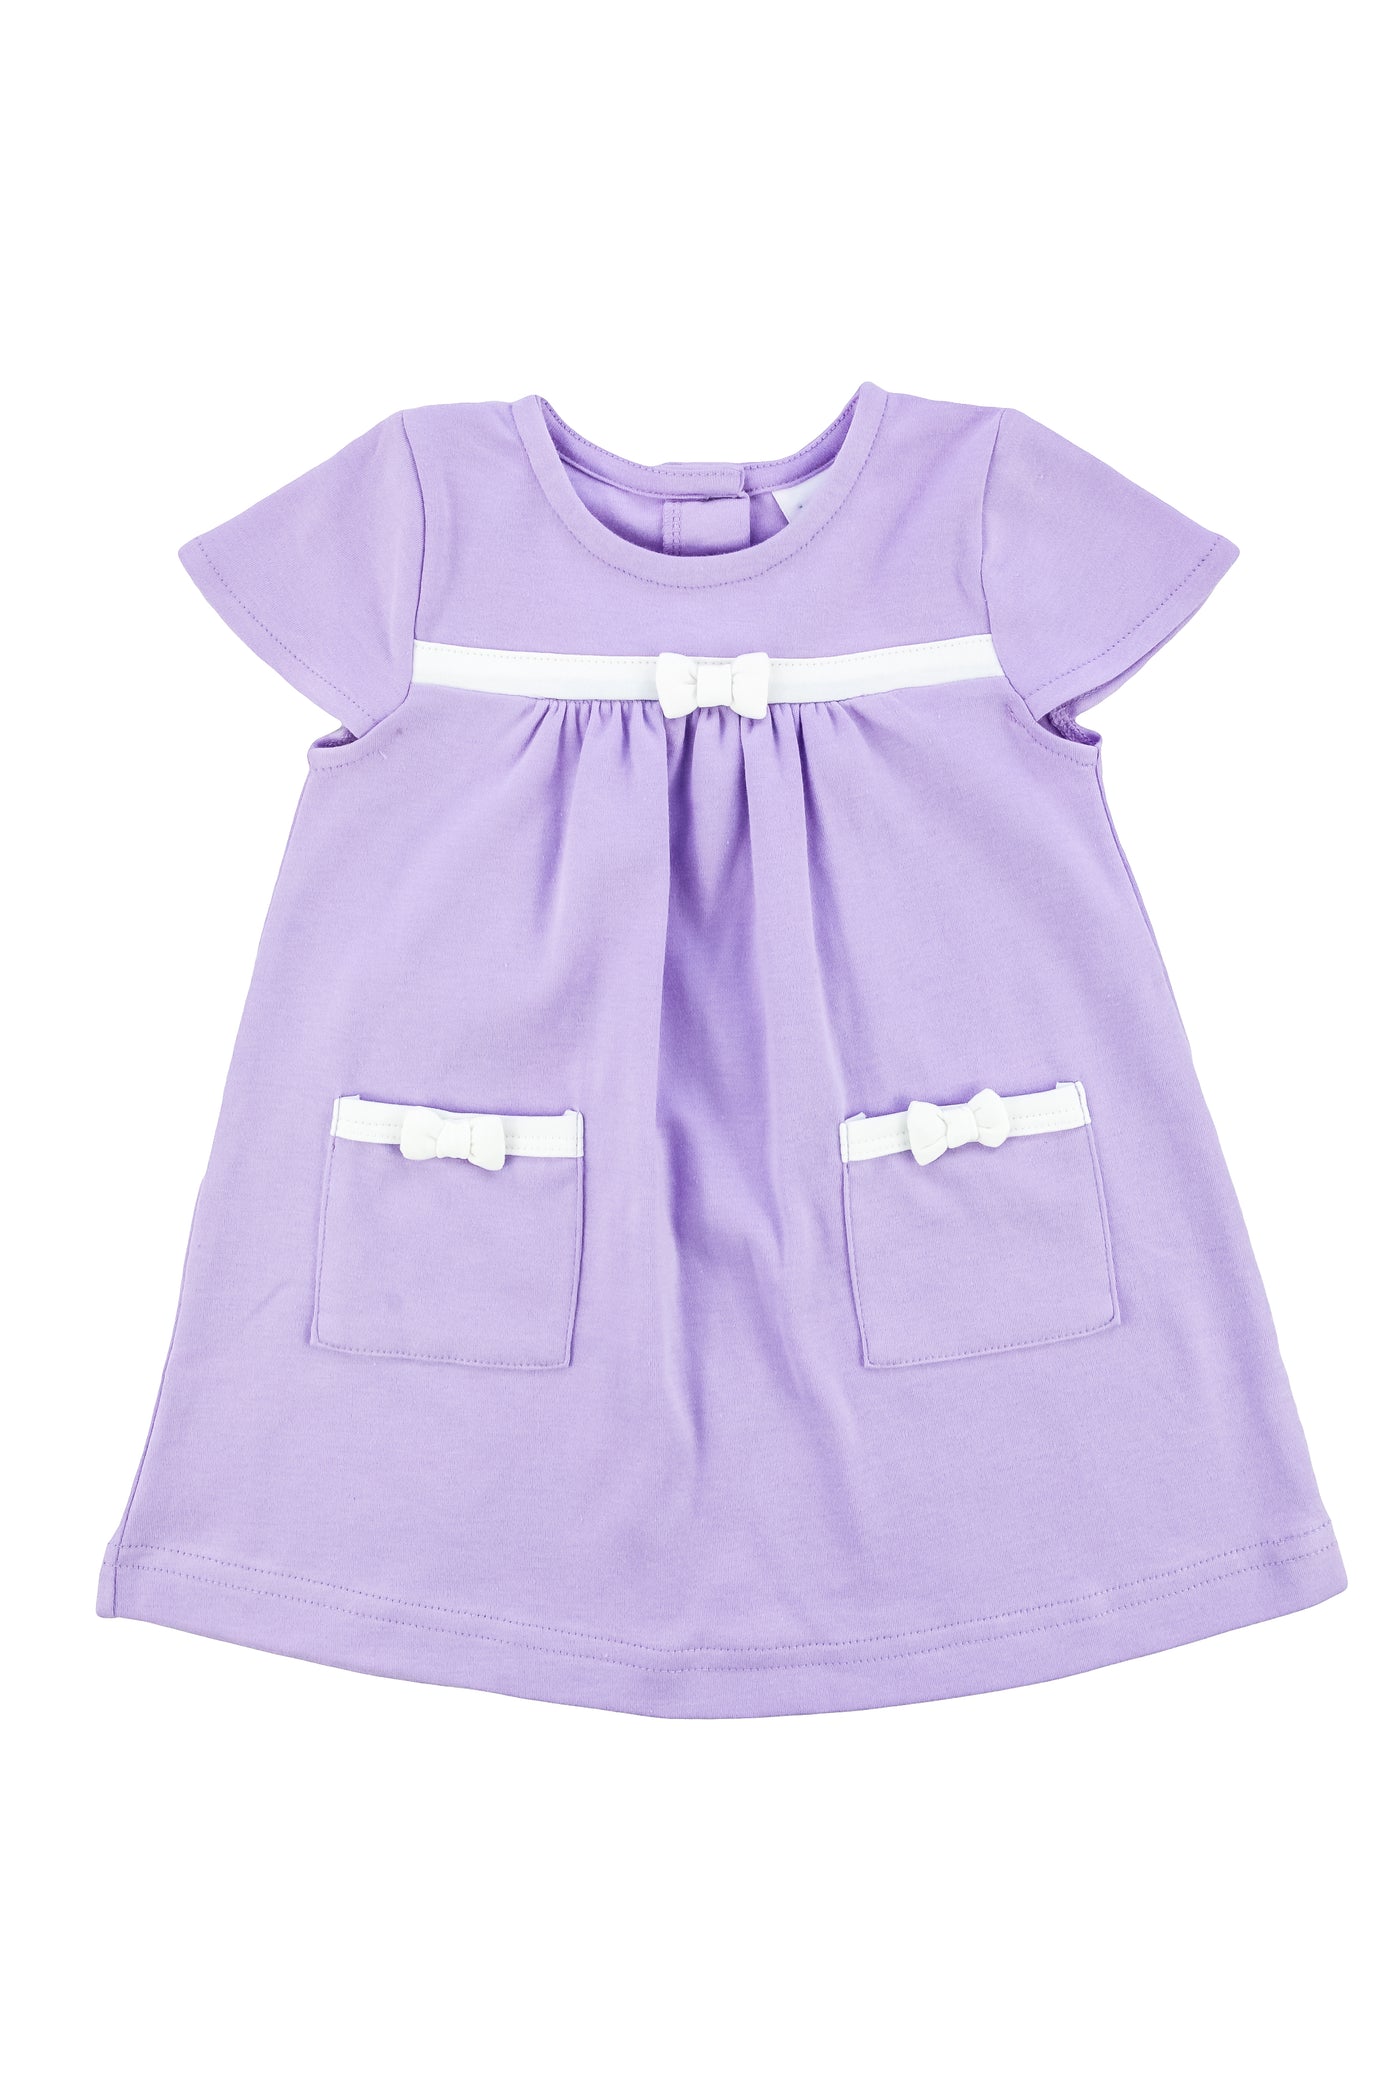 Purple Knit Dress with Bow Pockets